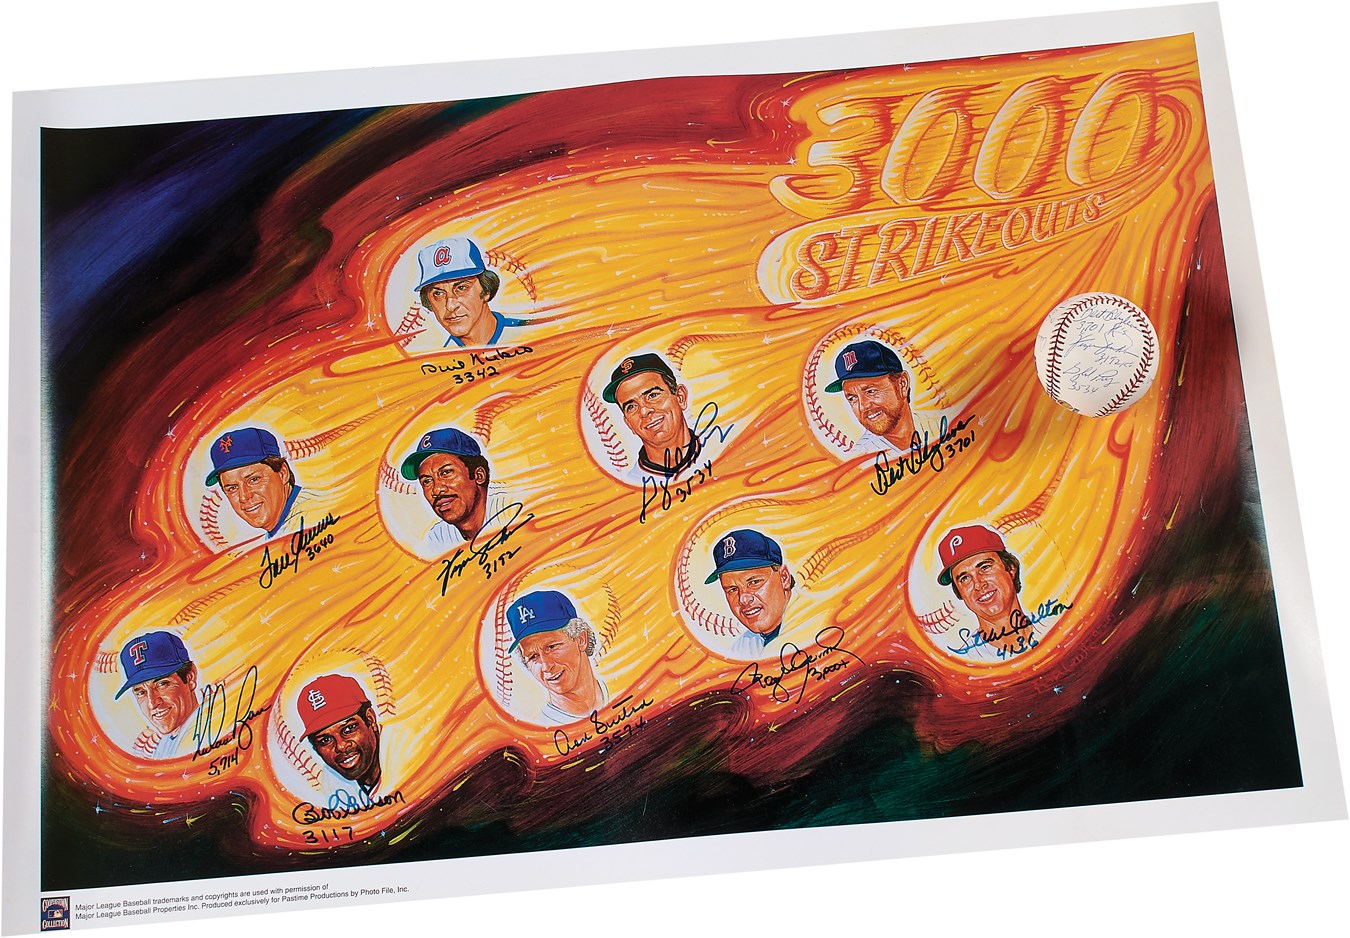 - 3,000 Strikout Pitchers Signed Print and Baseball